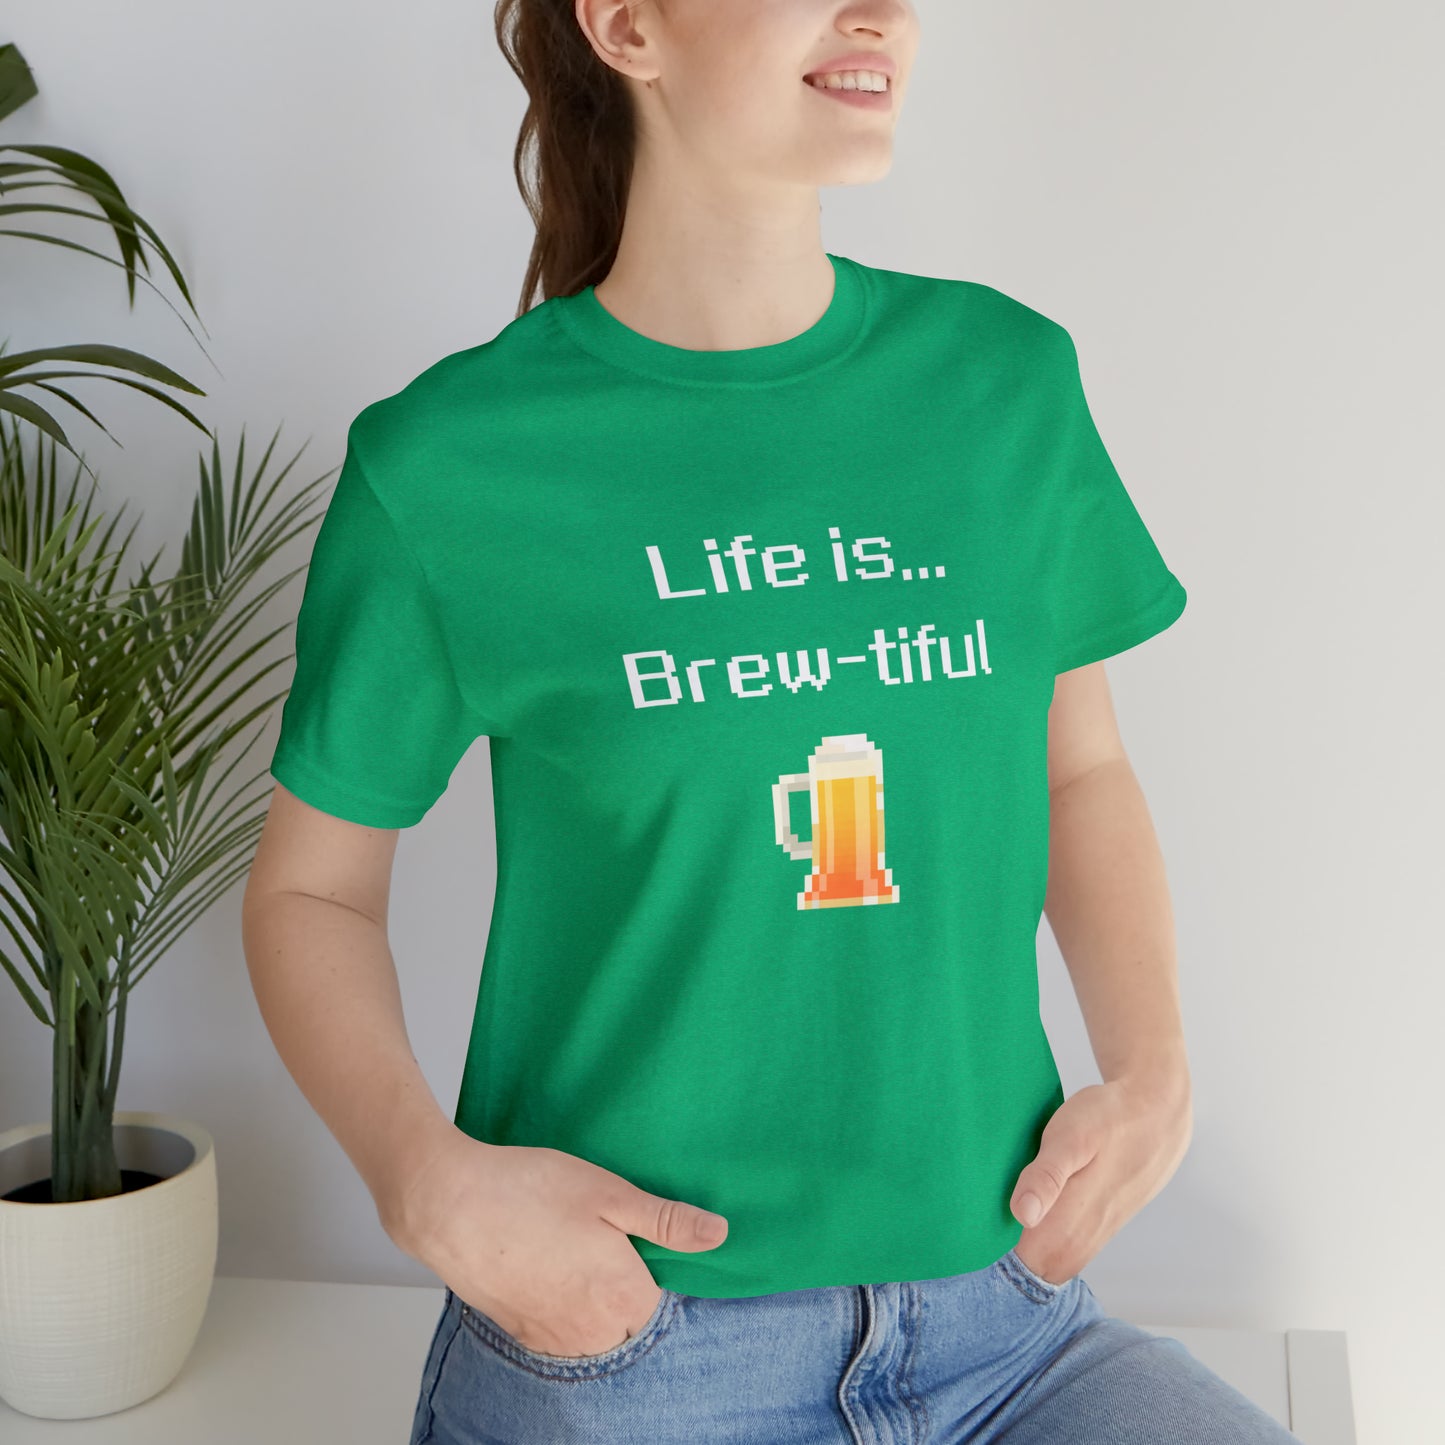 Life is Brew-tiful (8-bit) - Beer T-Shirt